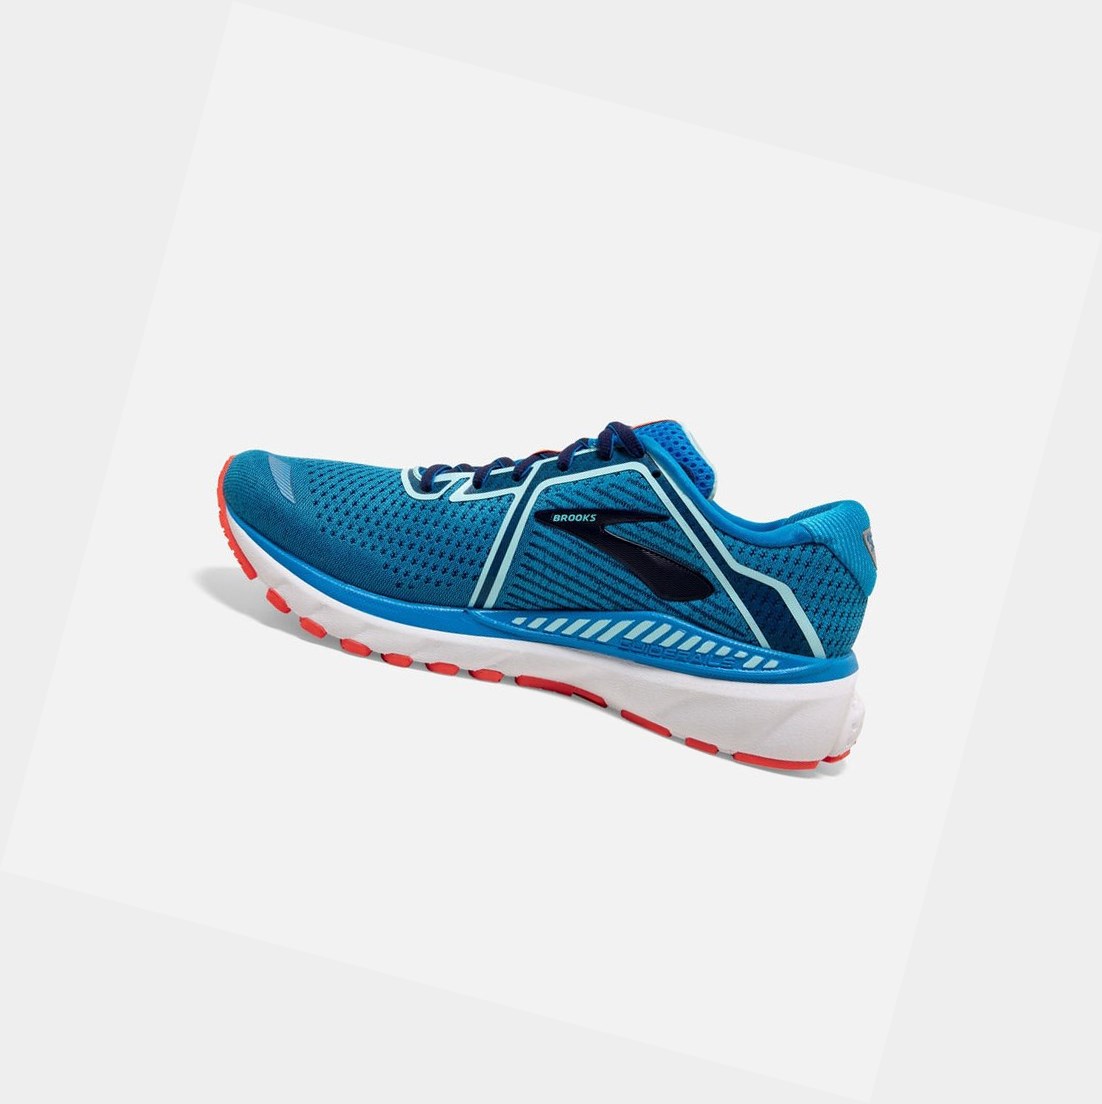 Brooks Adrenaline GTS 20 Women's Walking Shoes Blue / Navy / Coral | LQTK-34197